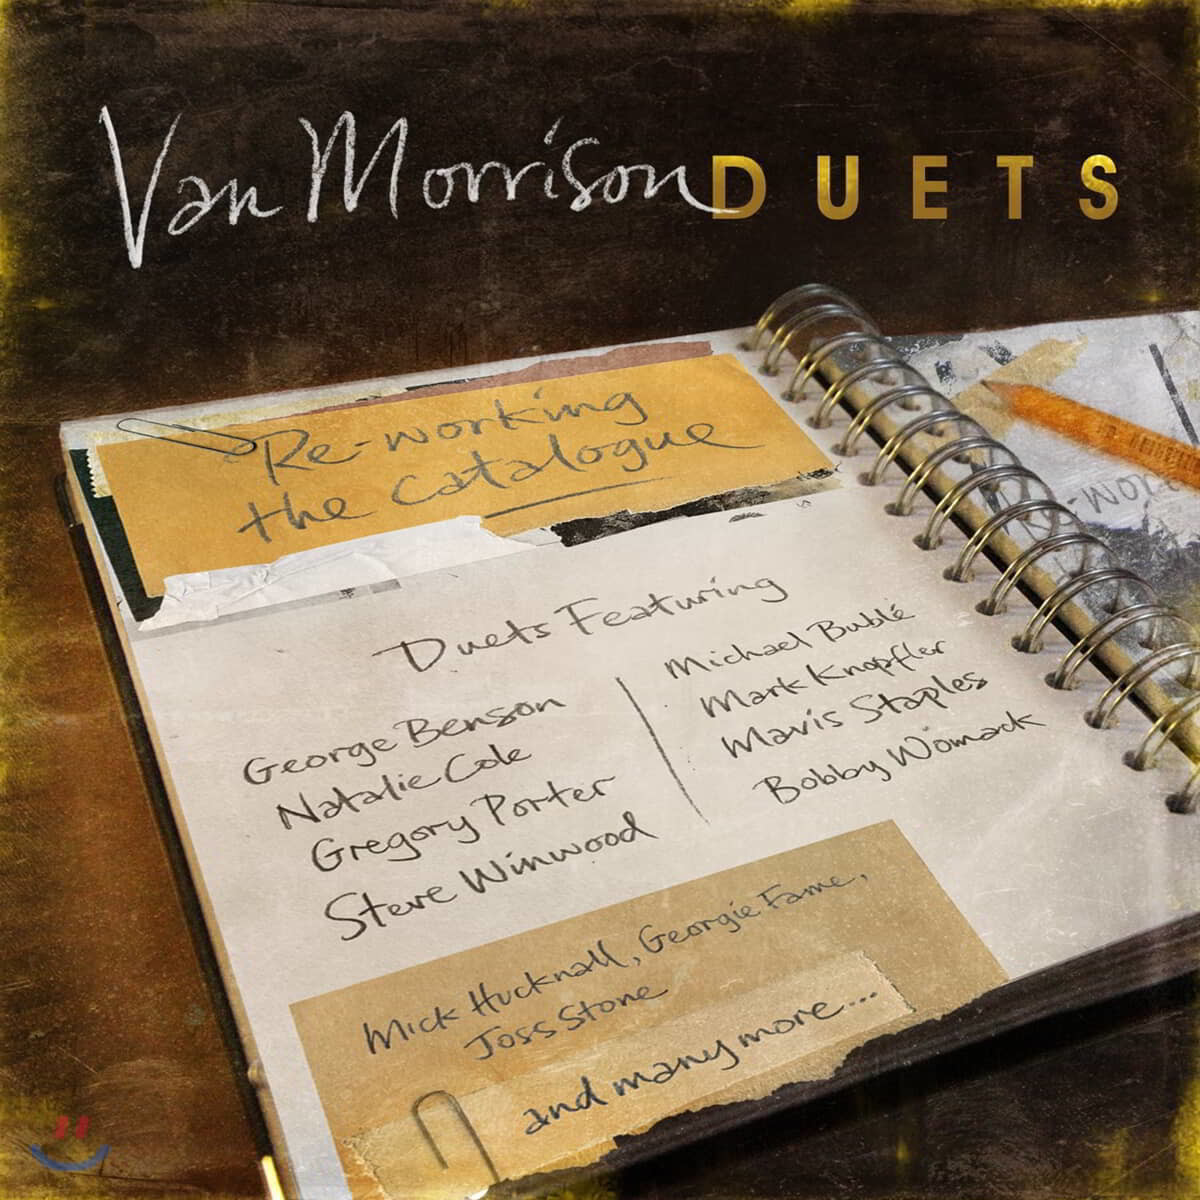 Van Morrison - Duets: Re-Working The Catalogue 벤 모리슨 듀엣 모음집